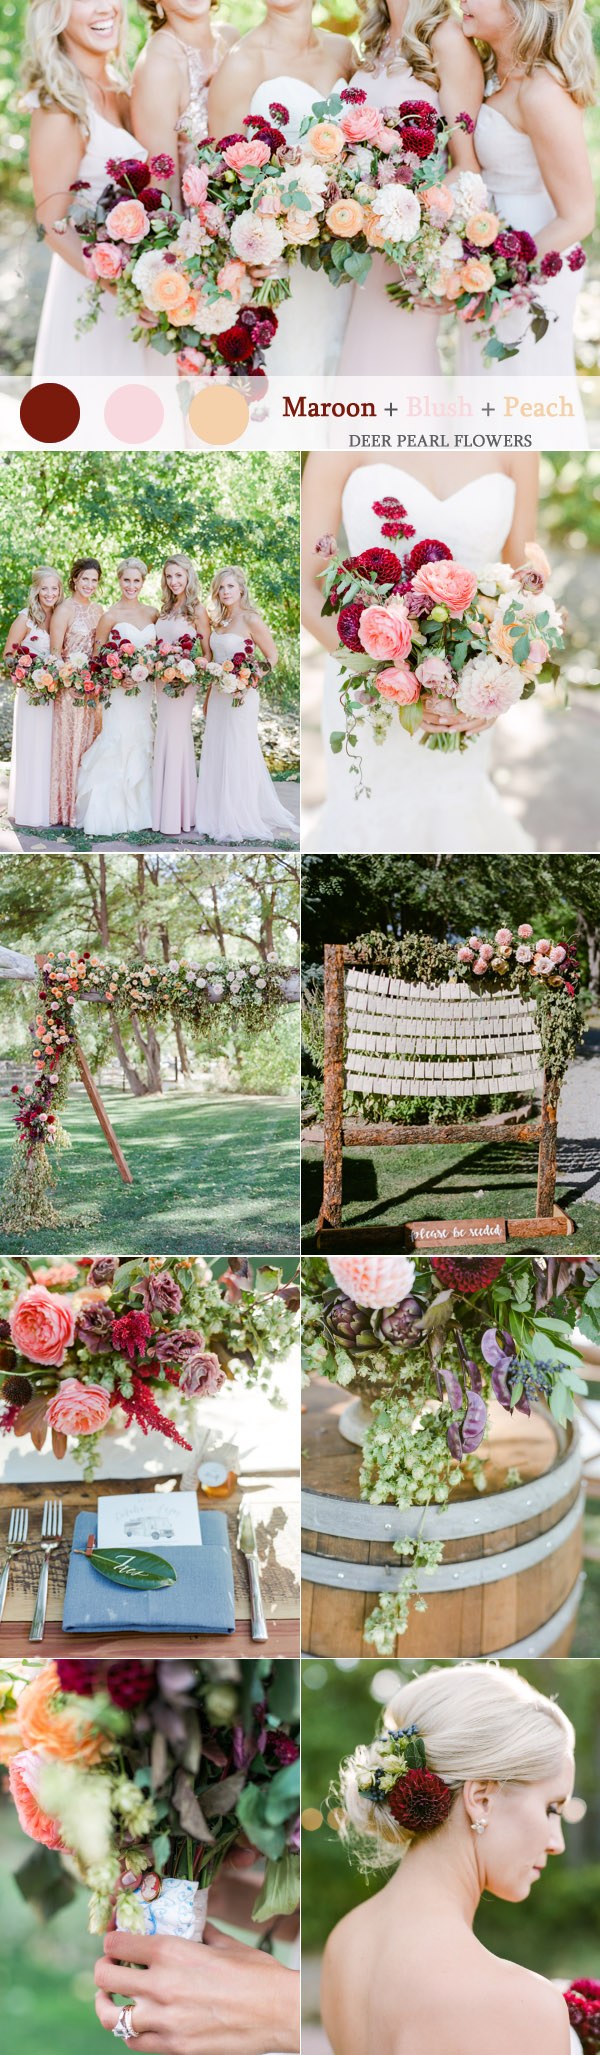 Maroon blush and peach wedding color ideas